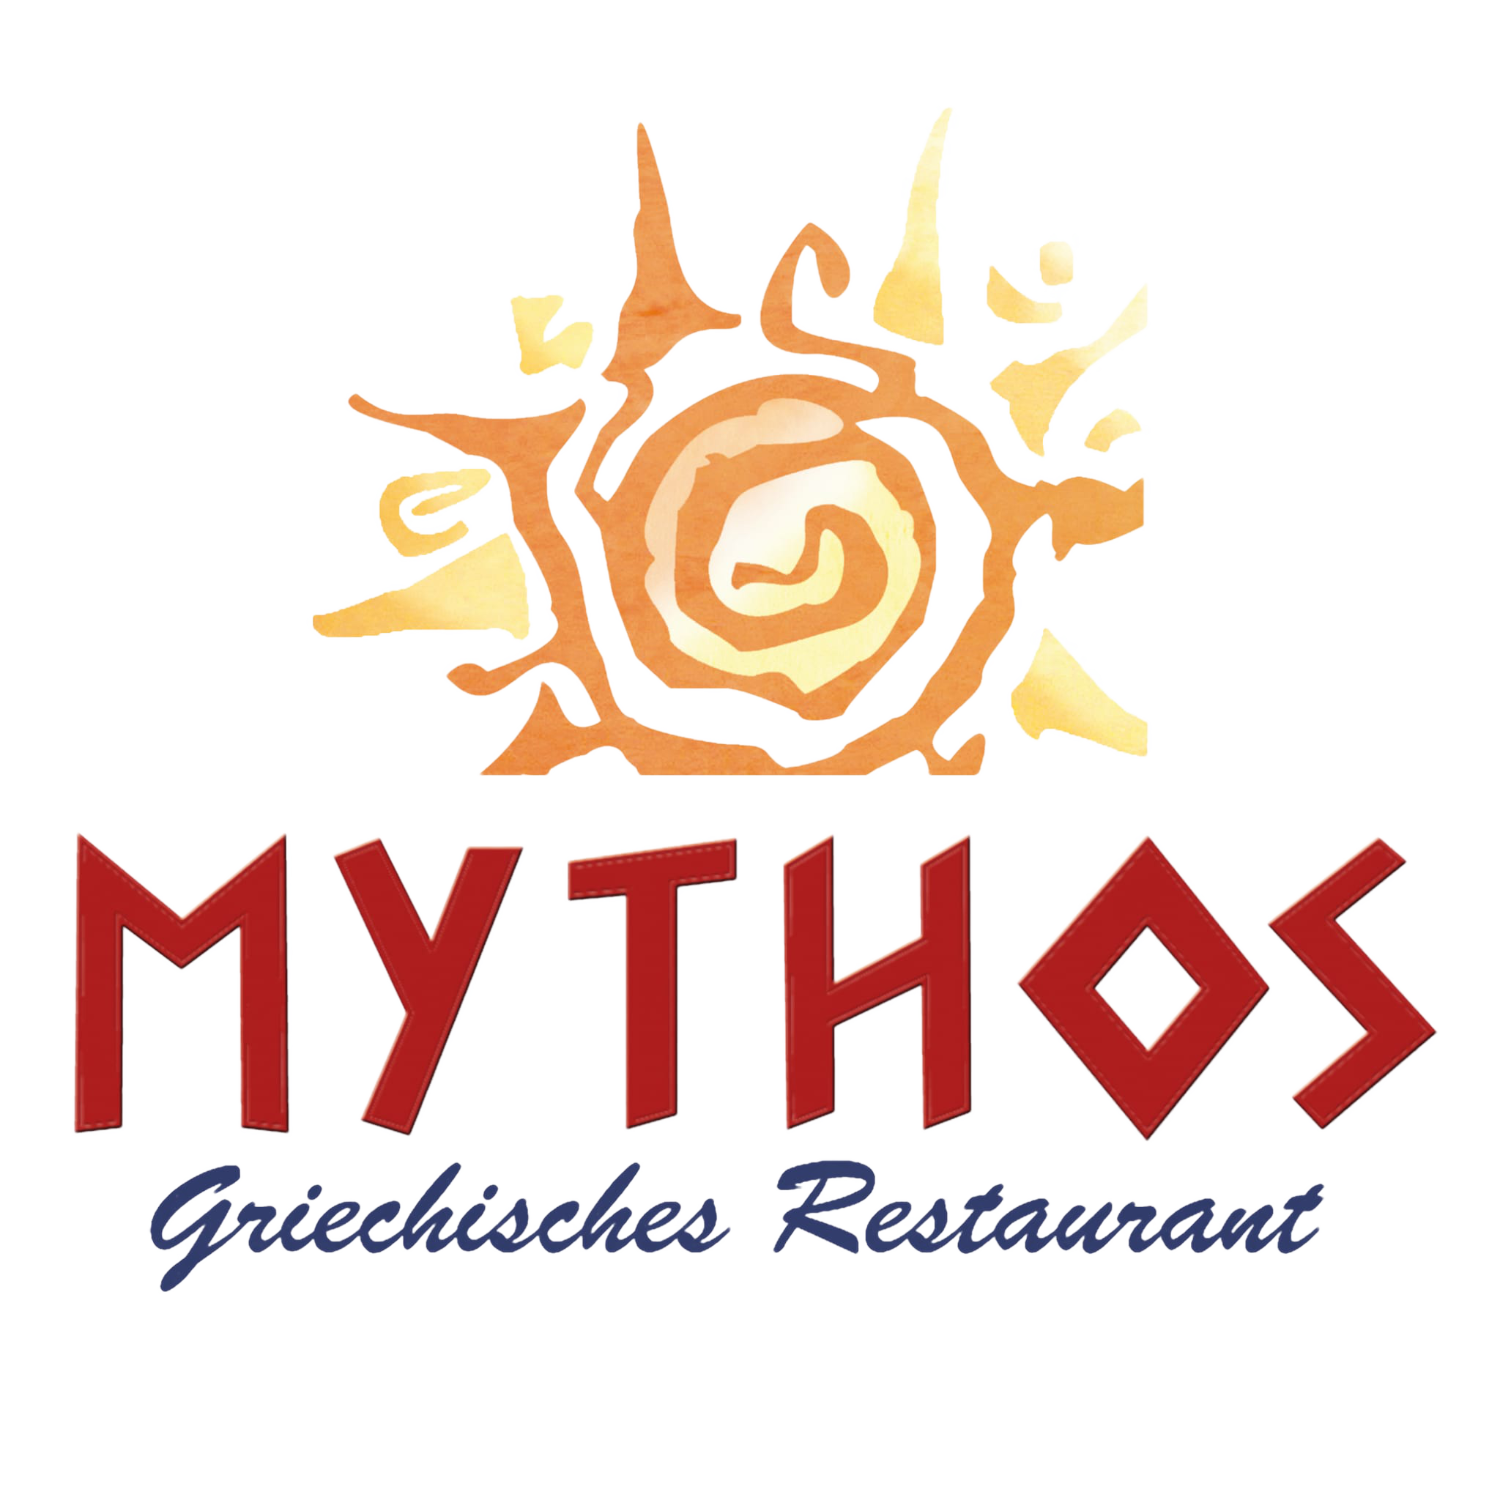 Mythos Cottbus